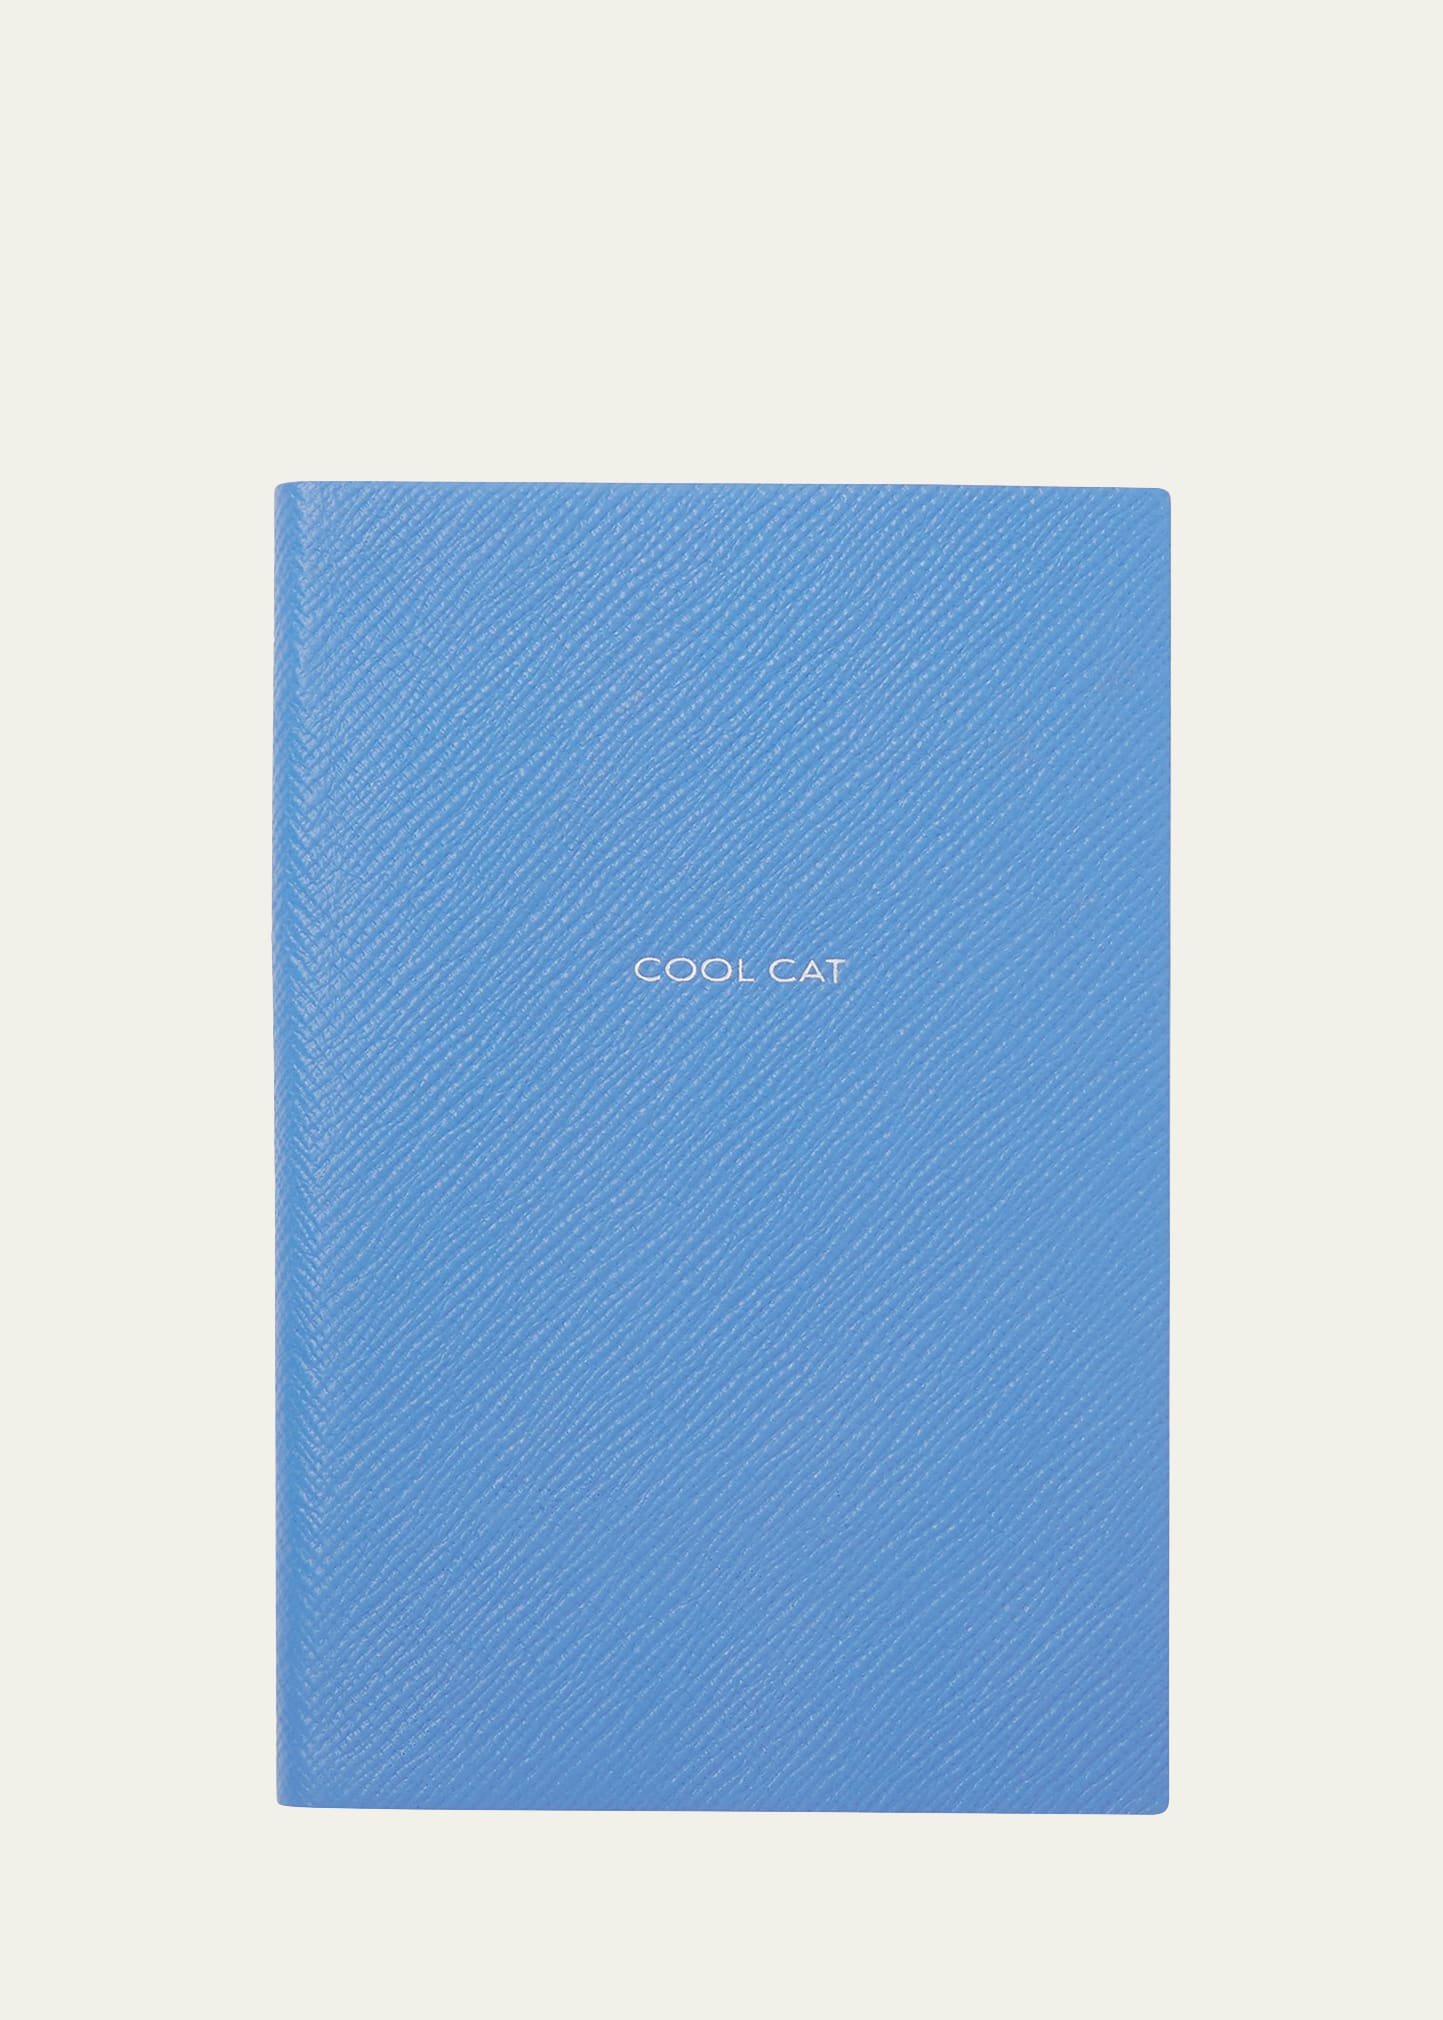 Chelsea "Cool Cat" Cross-Grain Leather Notebook